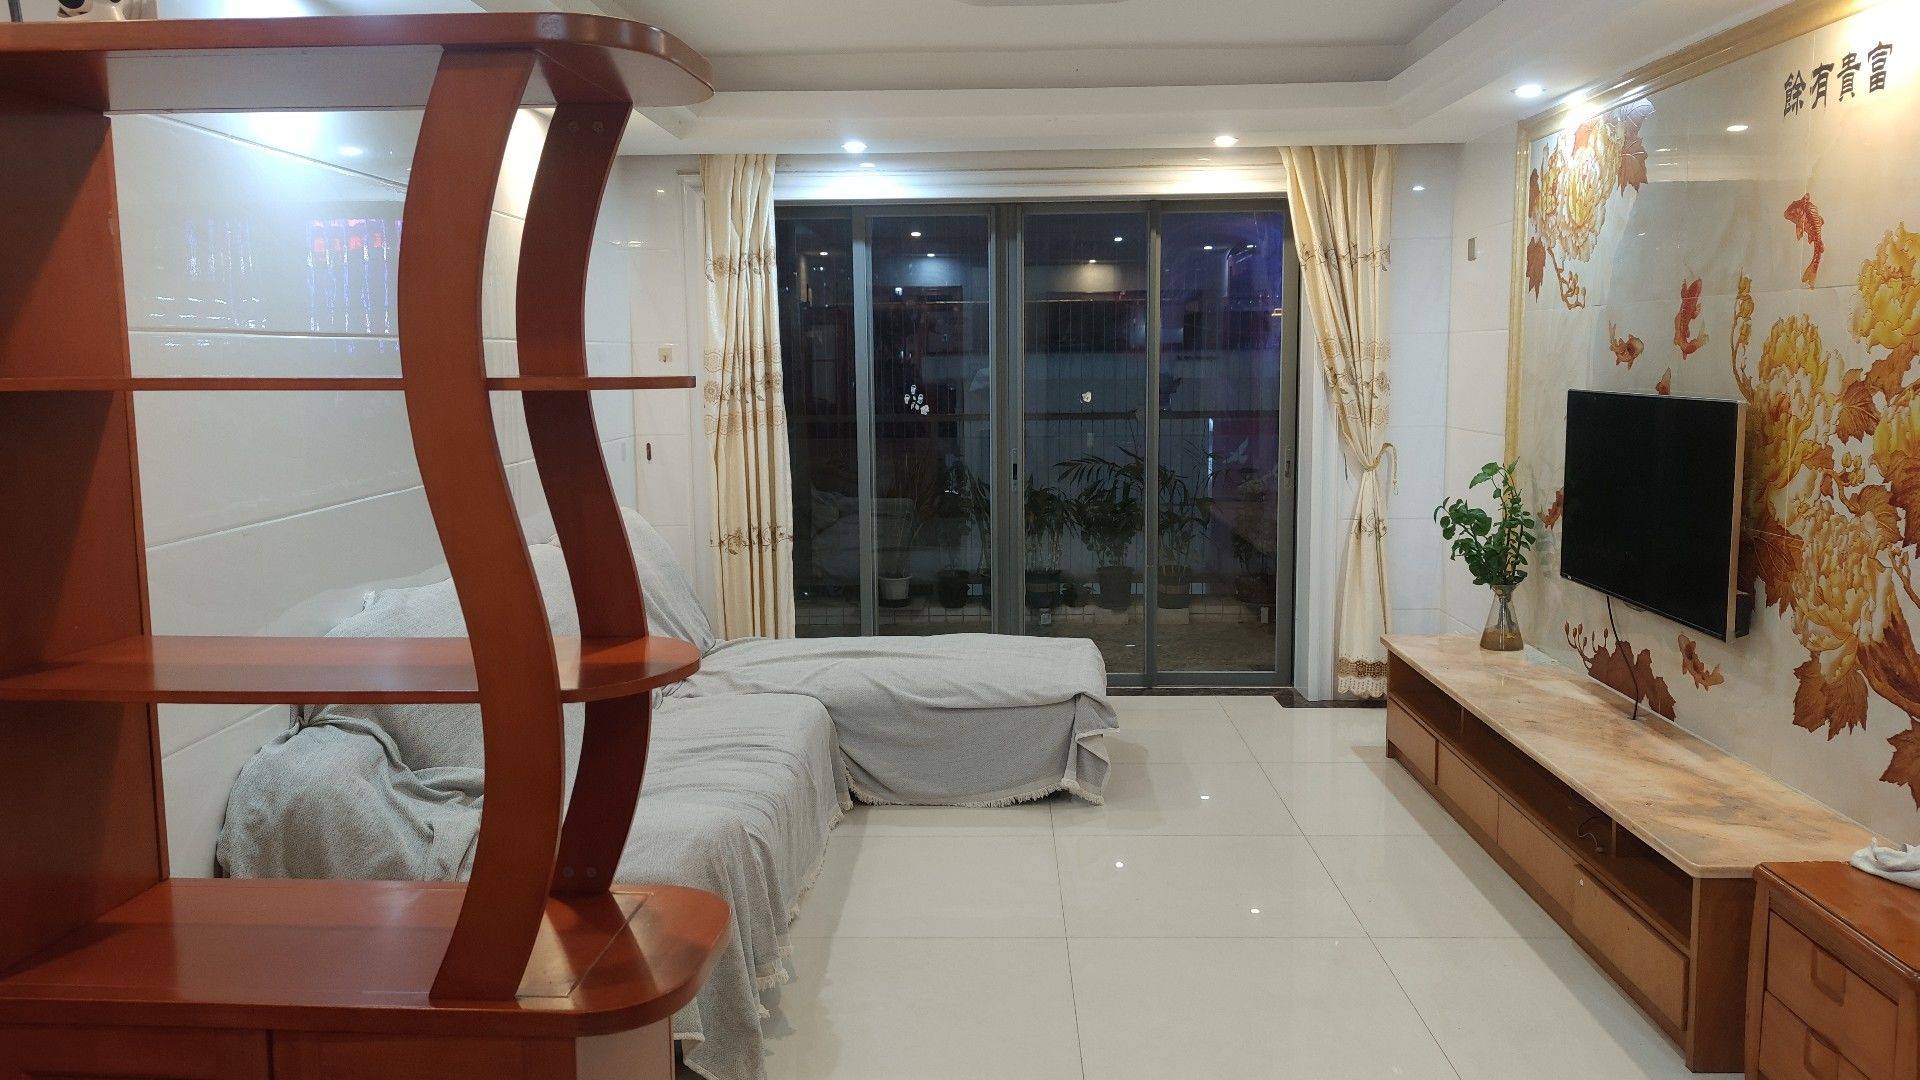 Shenzhen-BaoAn-Cozy Home,Clean&Comfy,No Gender Limit,Hustle & Bustle,Chilled